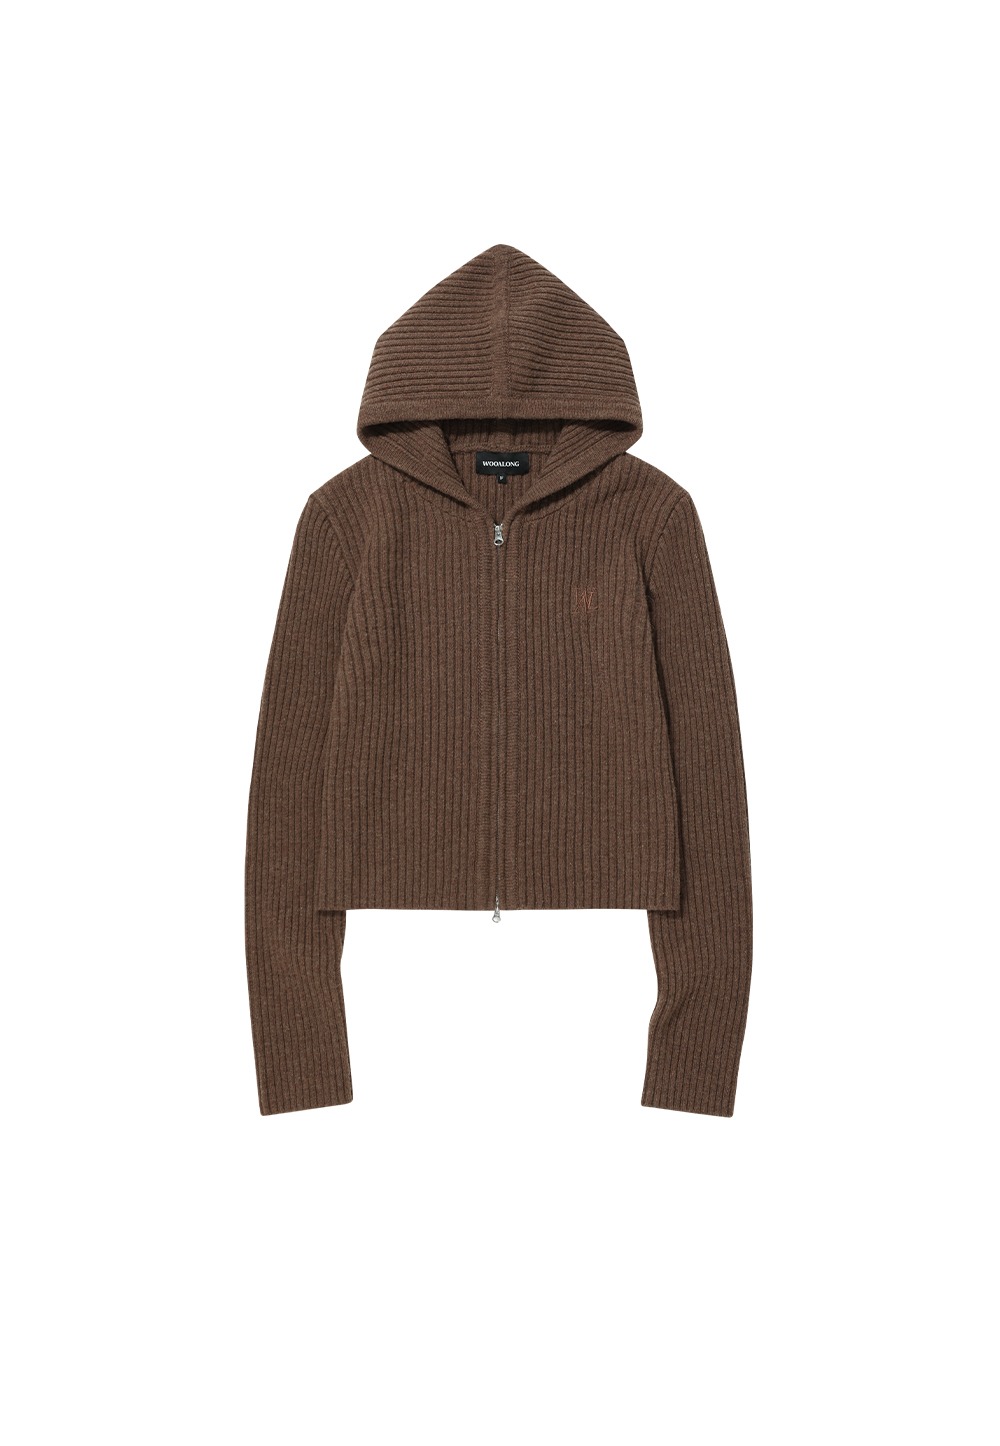 Signature slim hood knit zip-up - BROWN